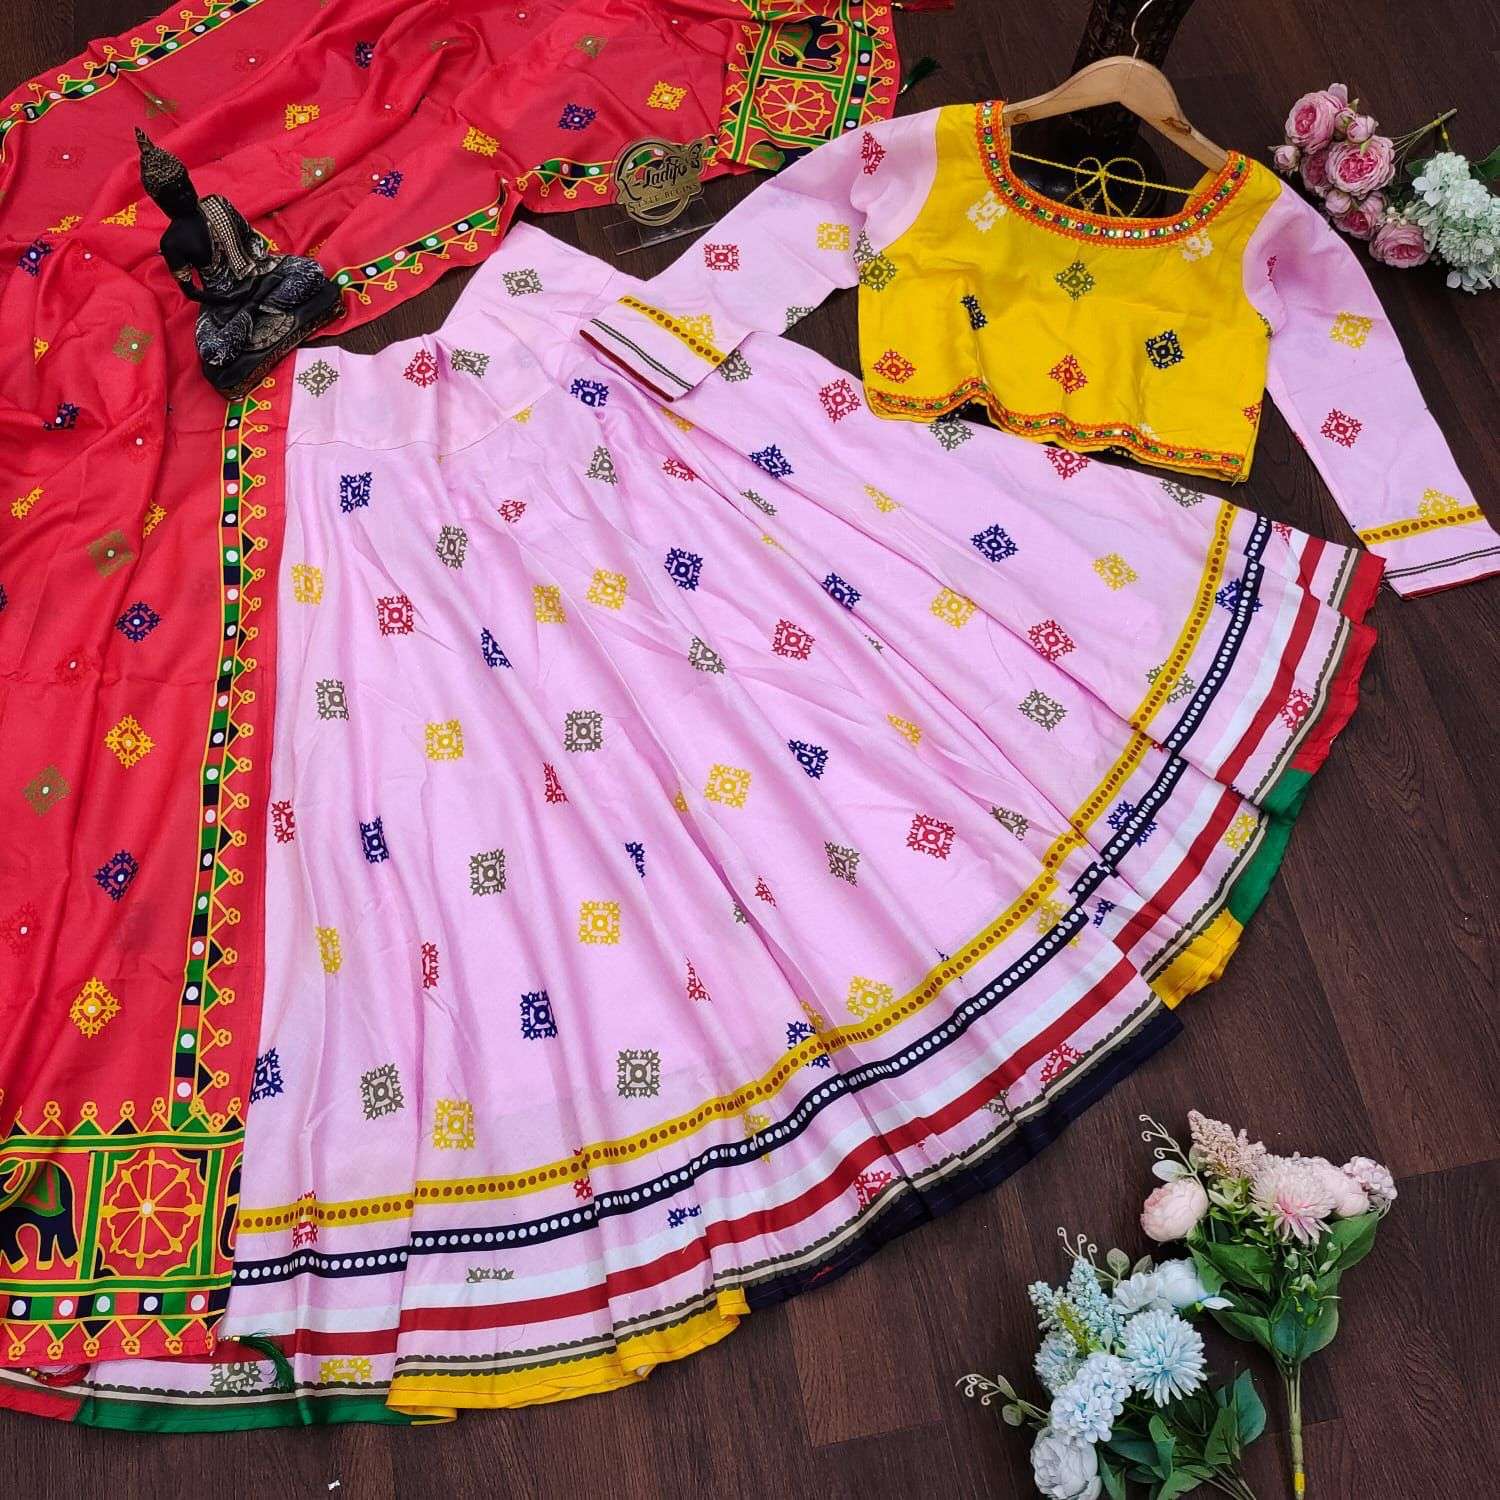 Ladies Designer cotton lehenga at Lowest Price in Ahmedabad -  Manufacturer,Supplier,Gujarat